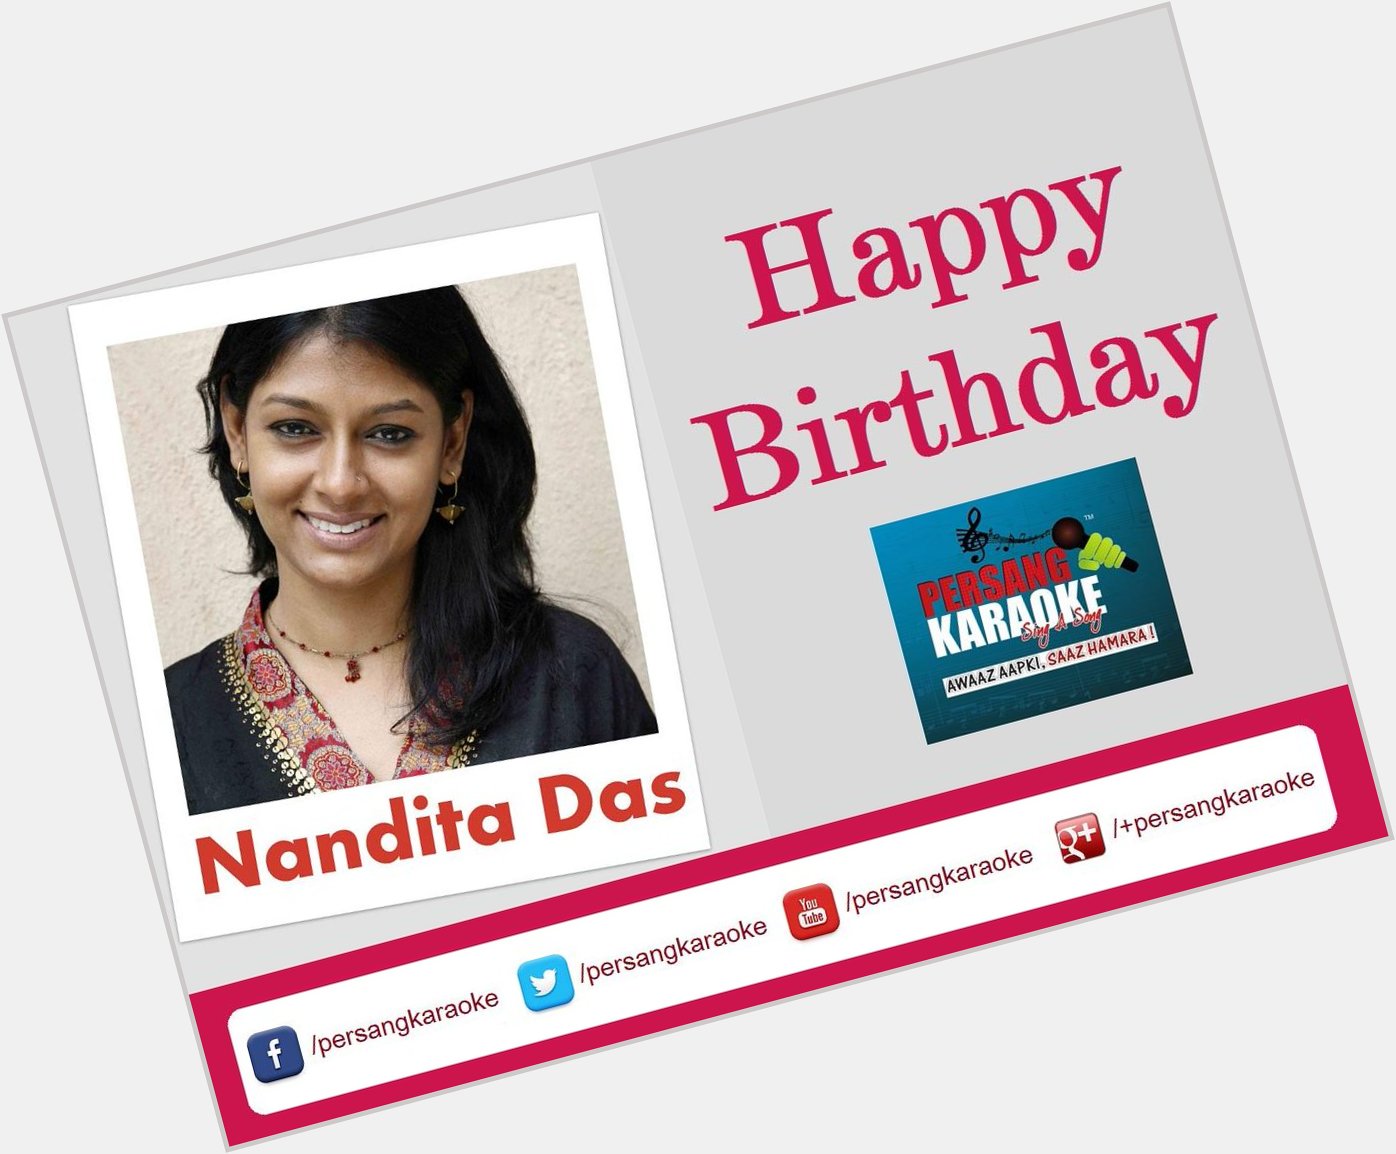 Persang Karaoke Wish A Very Happy Birthday to actress Nandita Das... 